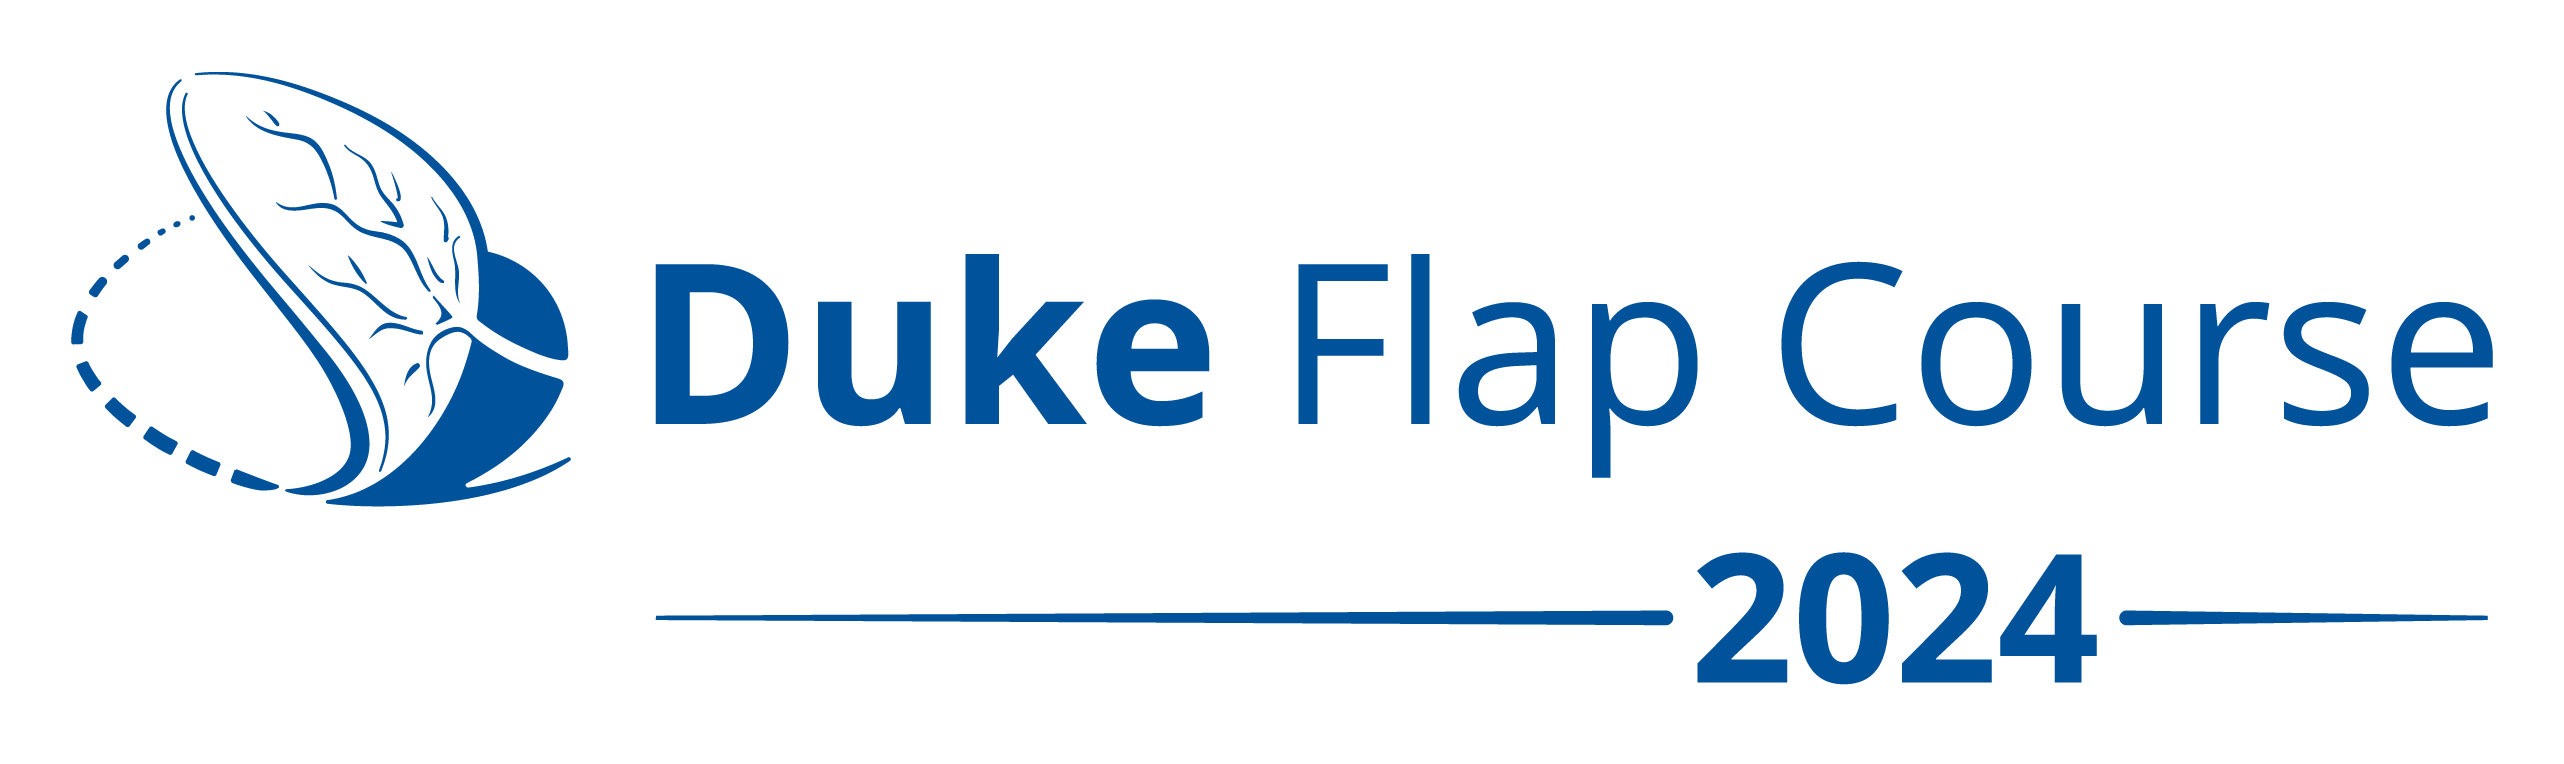 Duke Flap Course 2024 logo